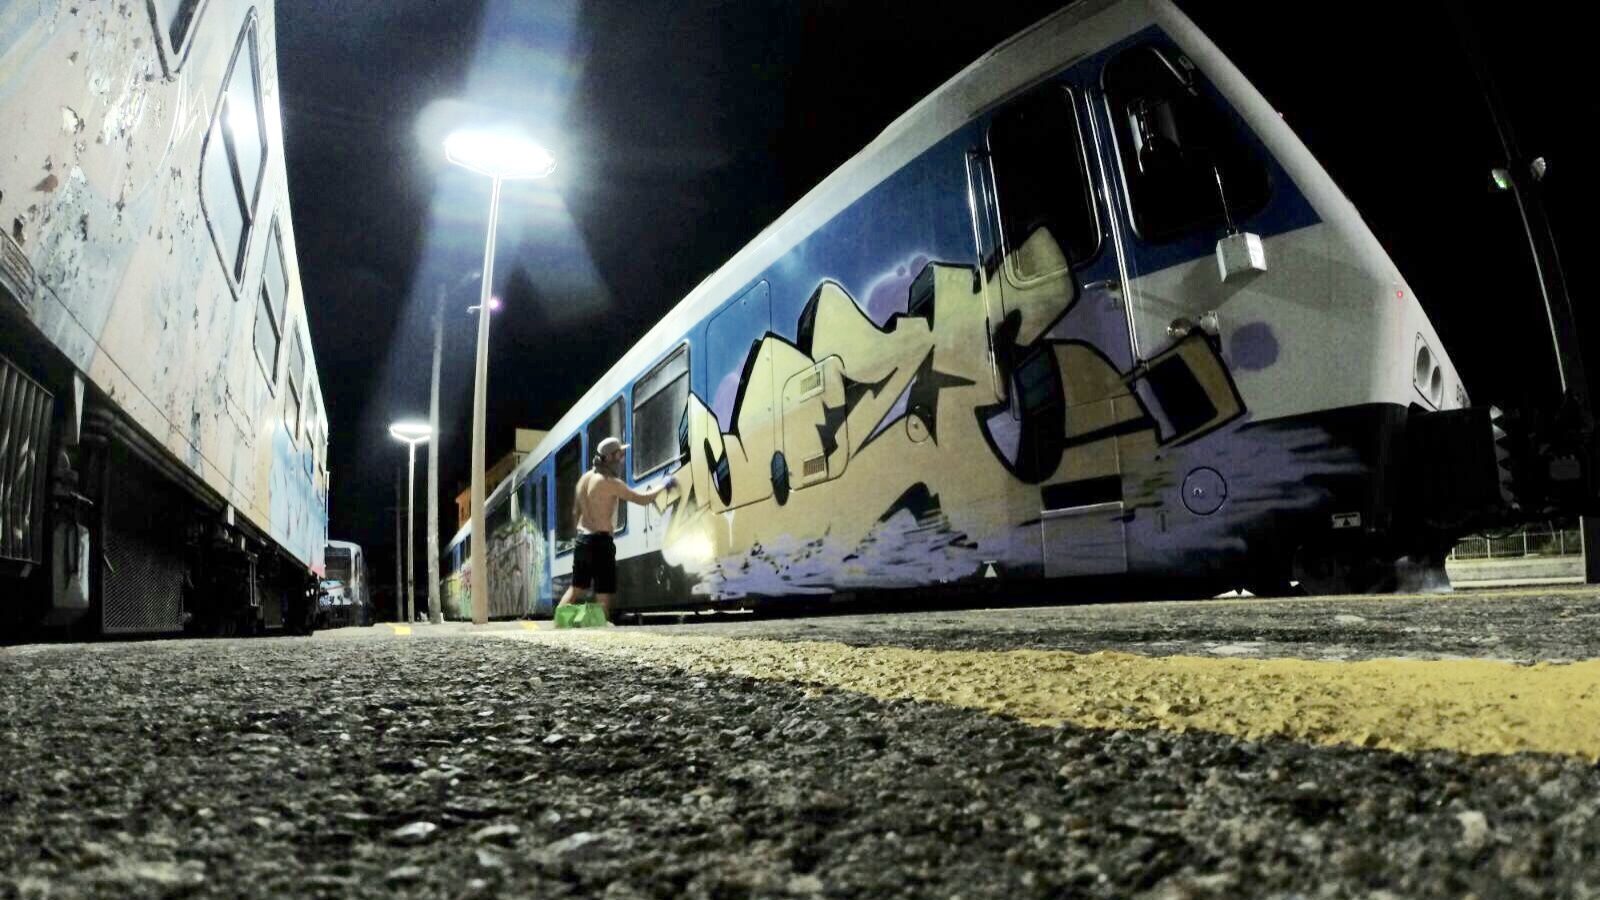 Coze - Graffiti train bombing europe